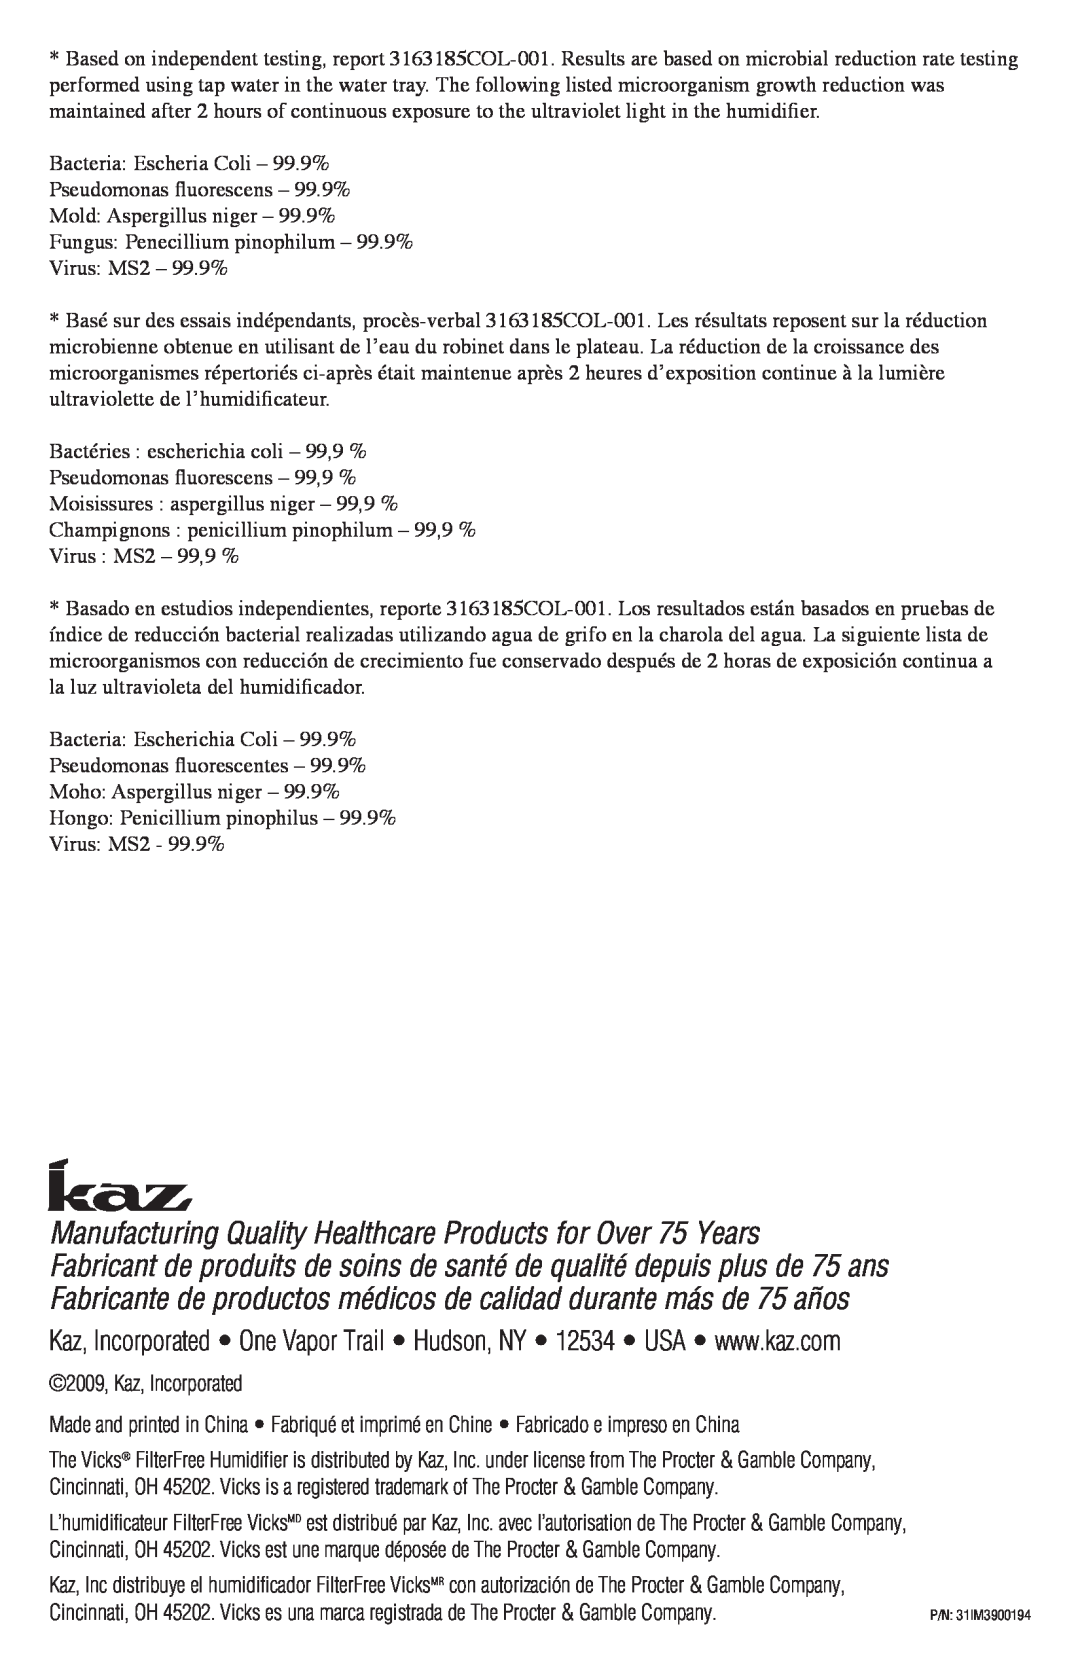 Kaz V3900 manual 2009, Kaz, Incorporated 